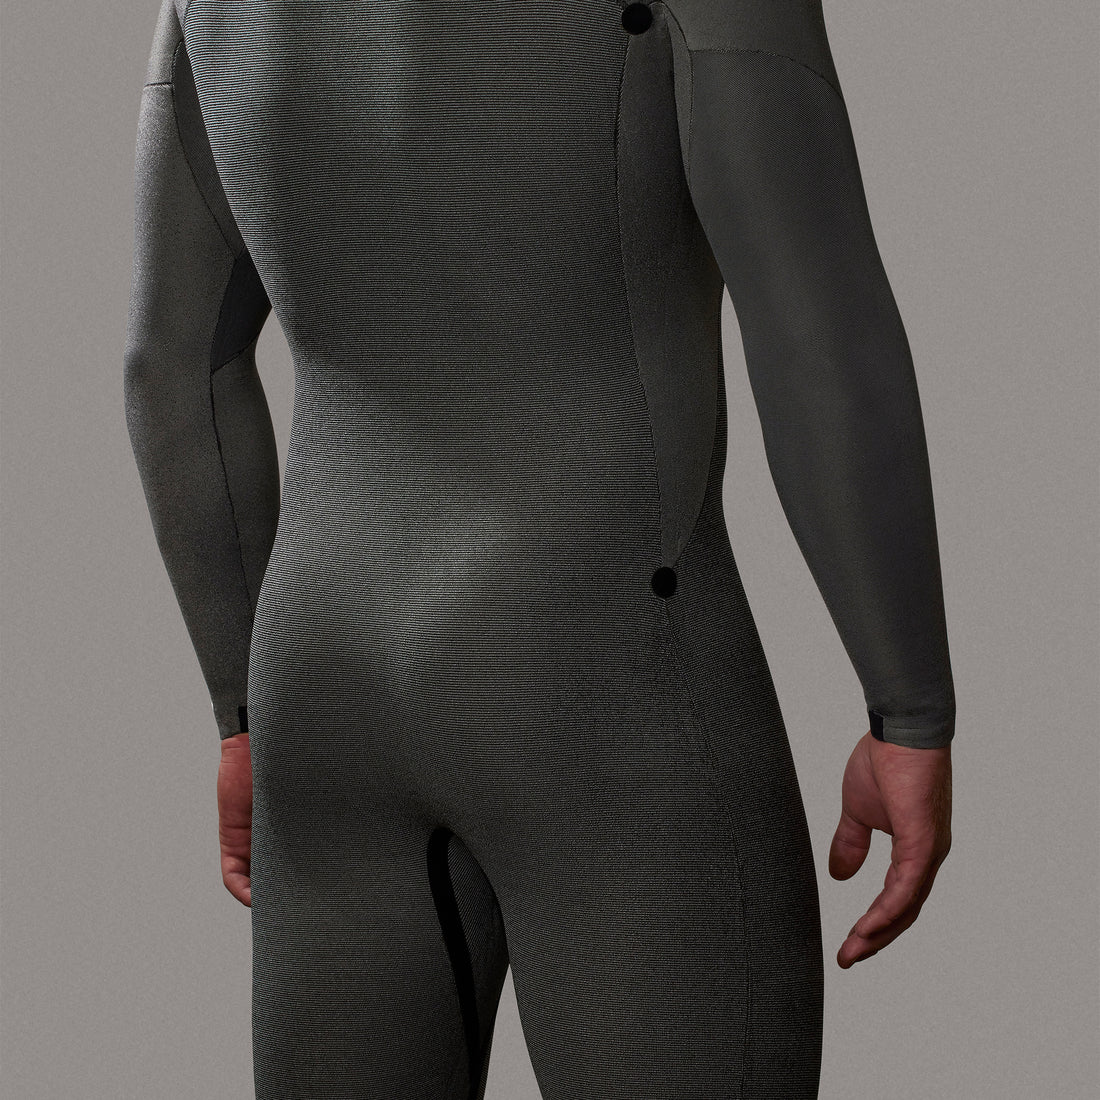 Xcel Comp Men Non-Hooded wetsuit 4/3mm